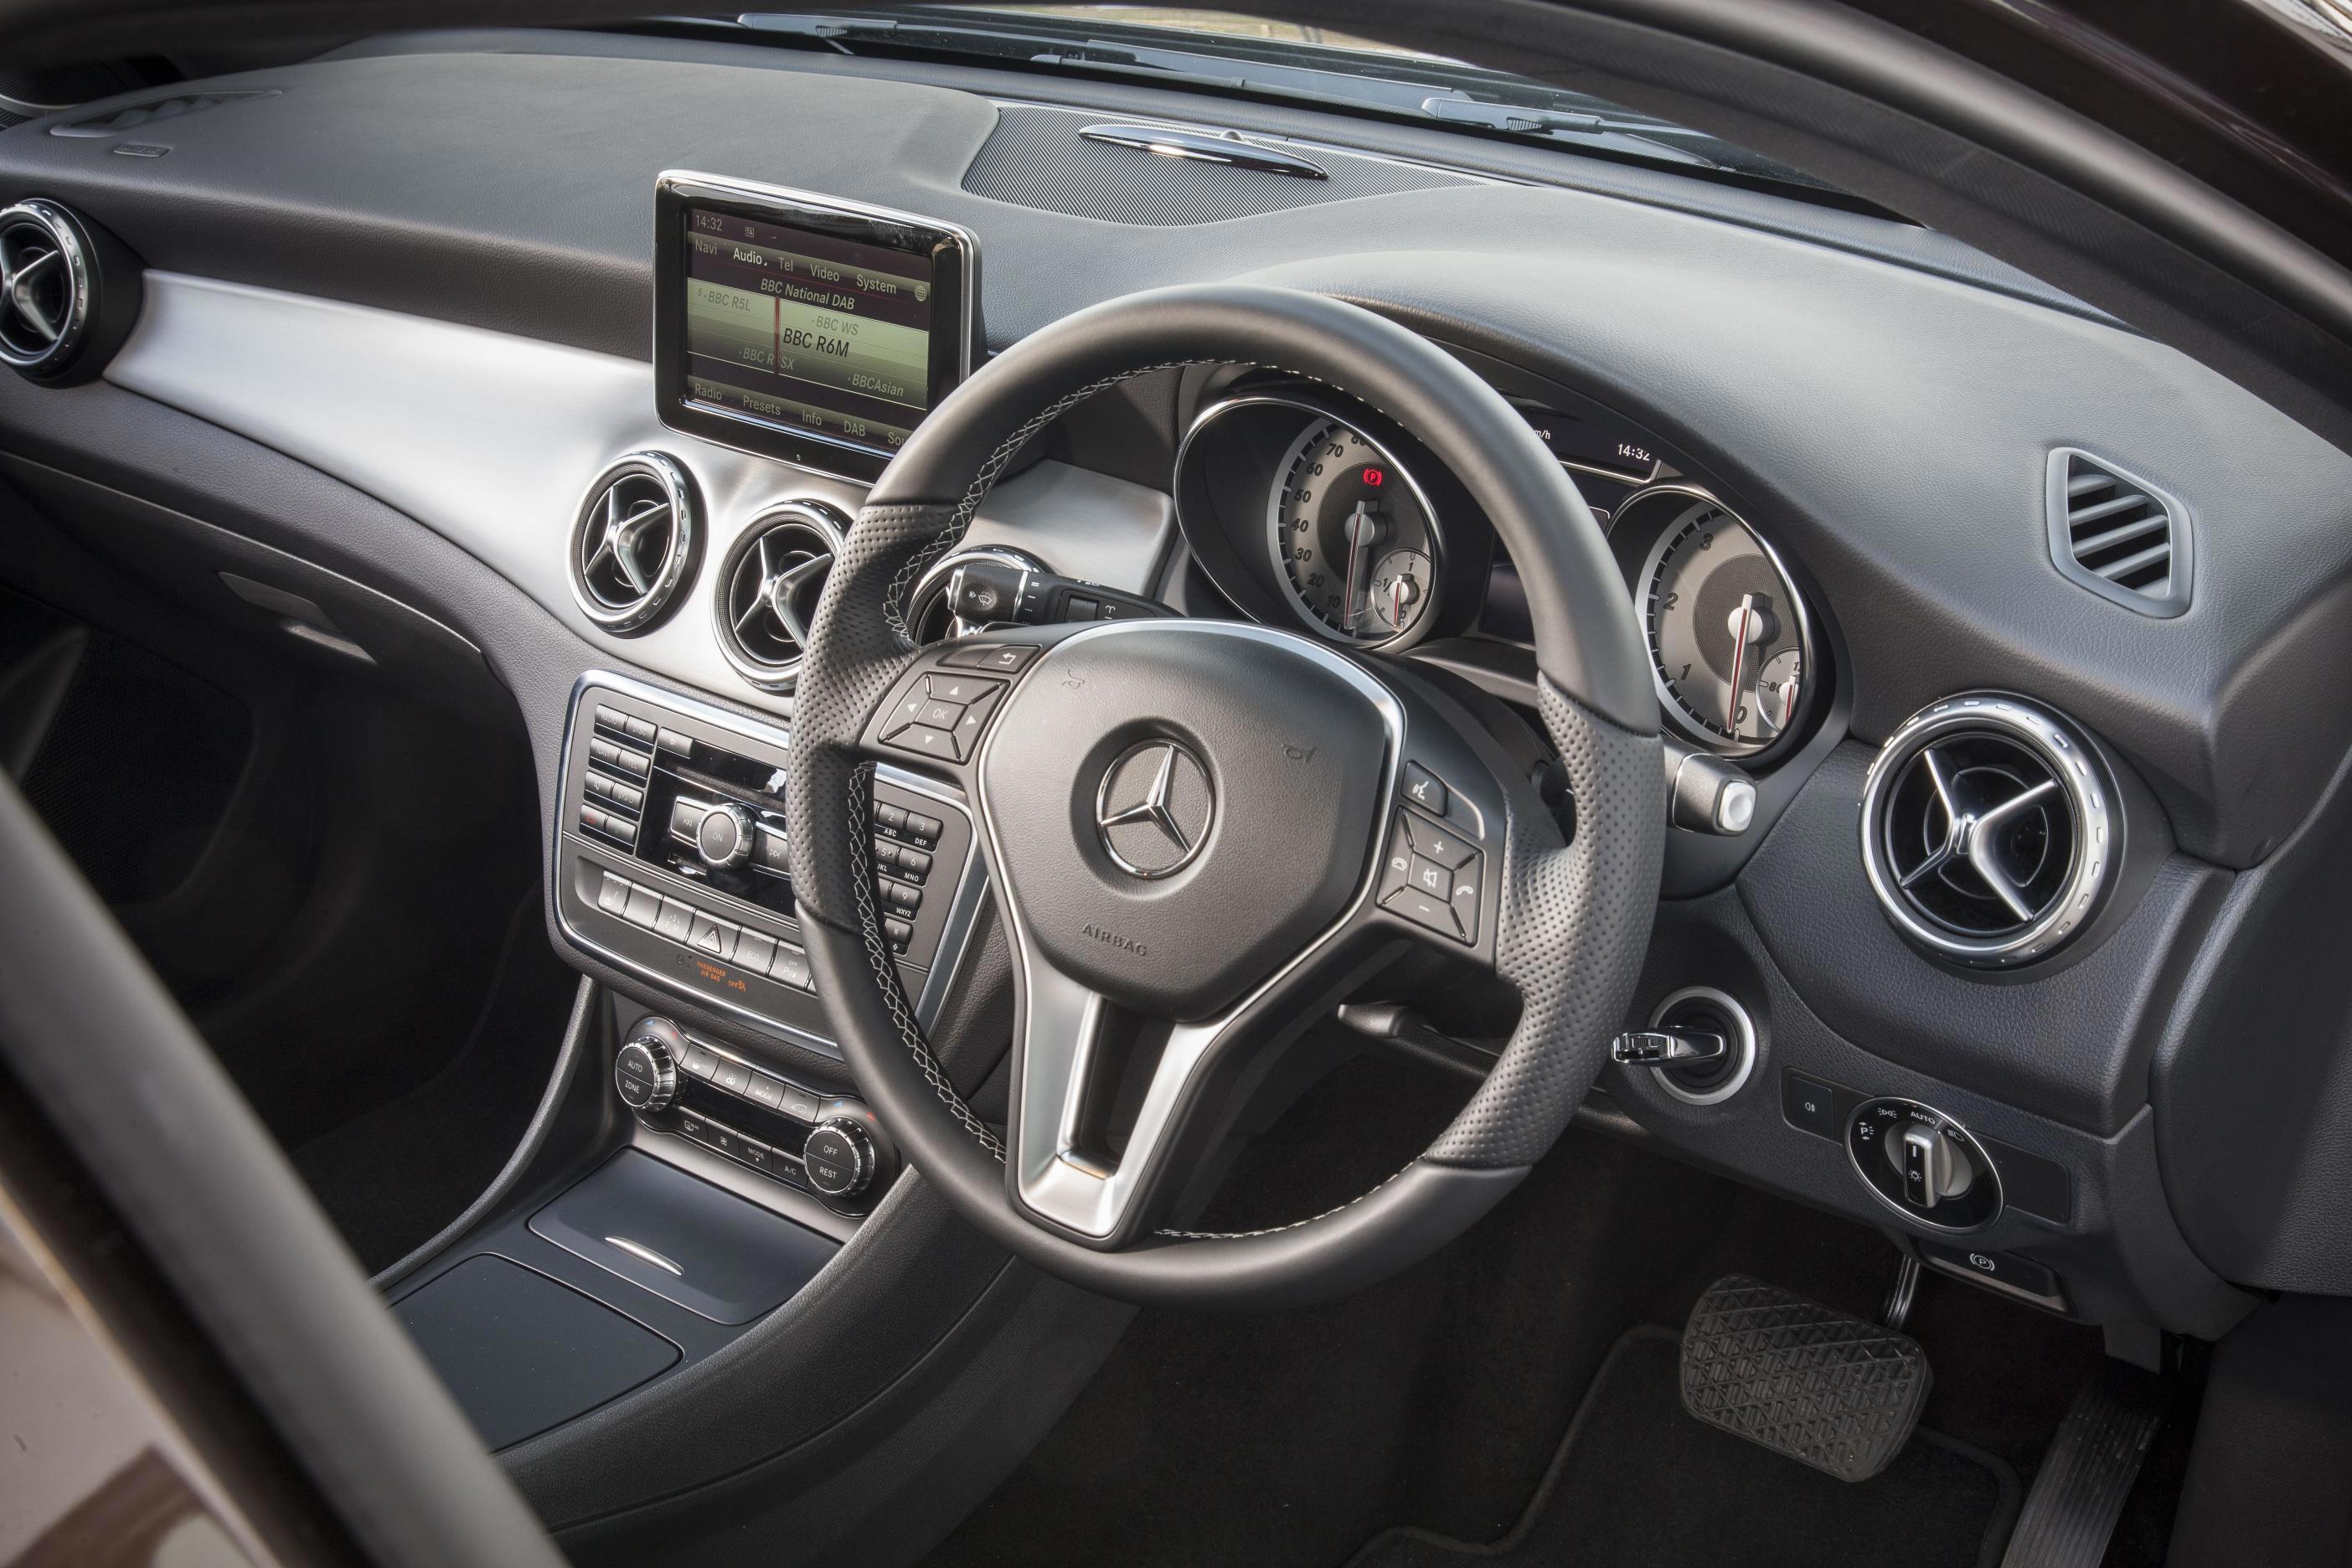 Mercedes GLA interior